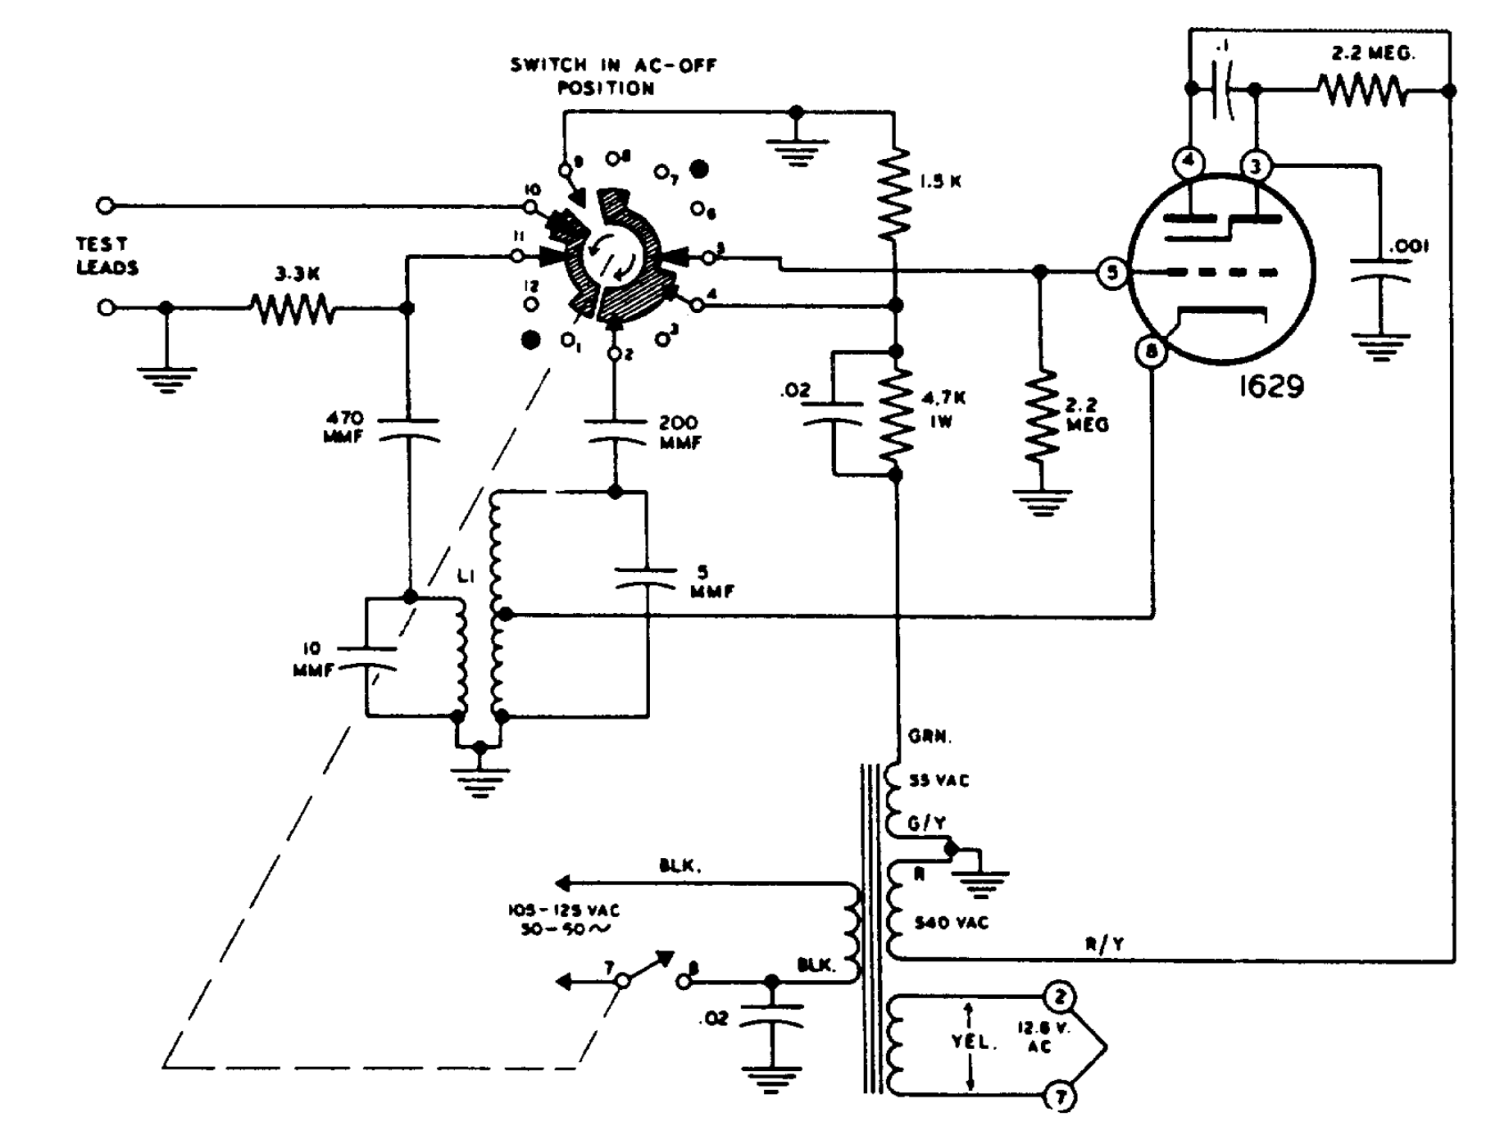 Heathkit CT-1 Capacitor Tester - Assembly Manual 1